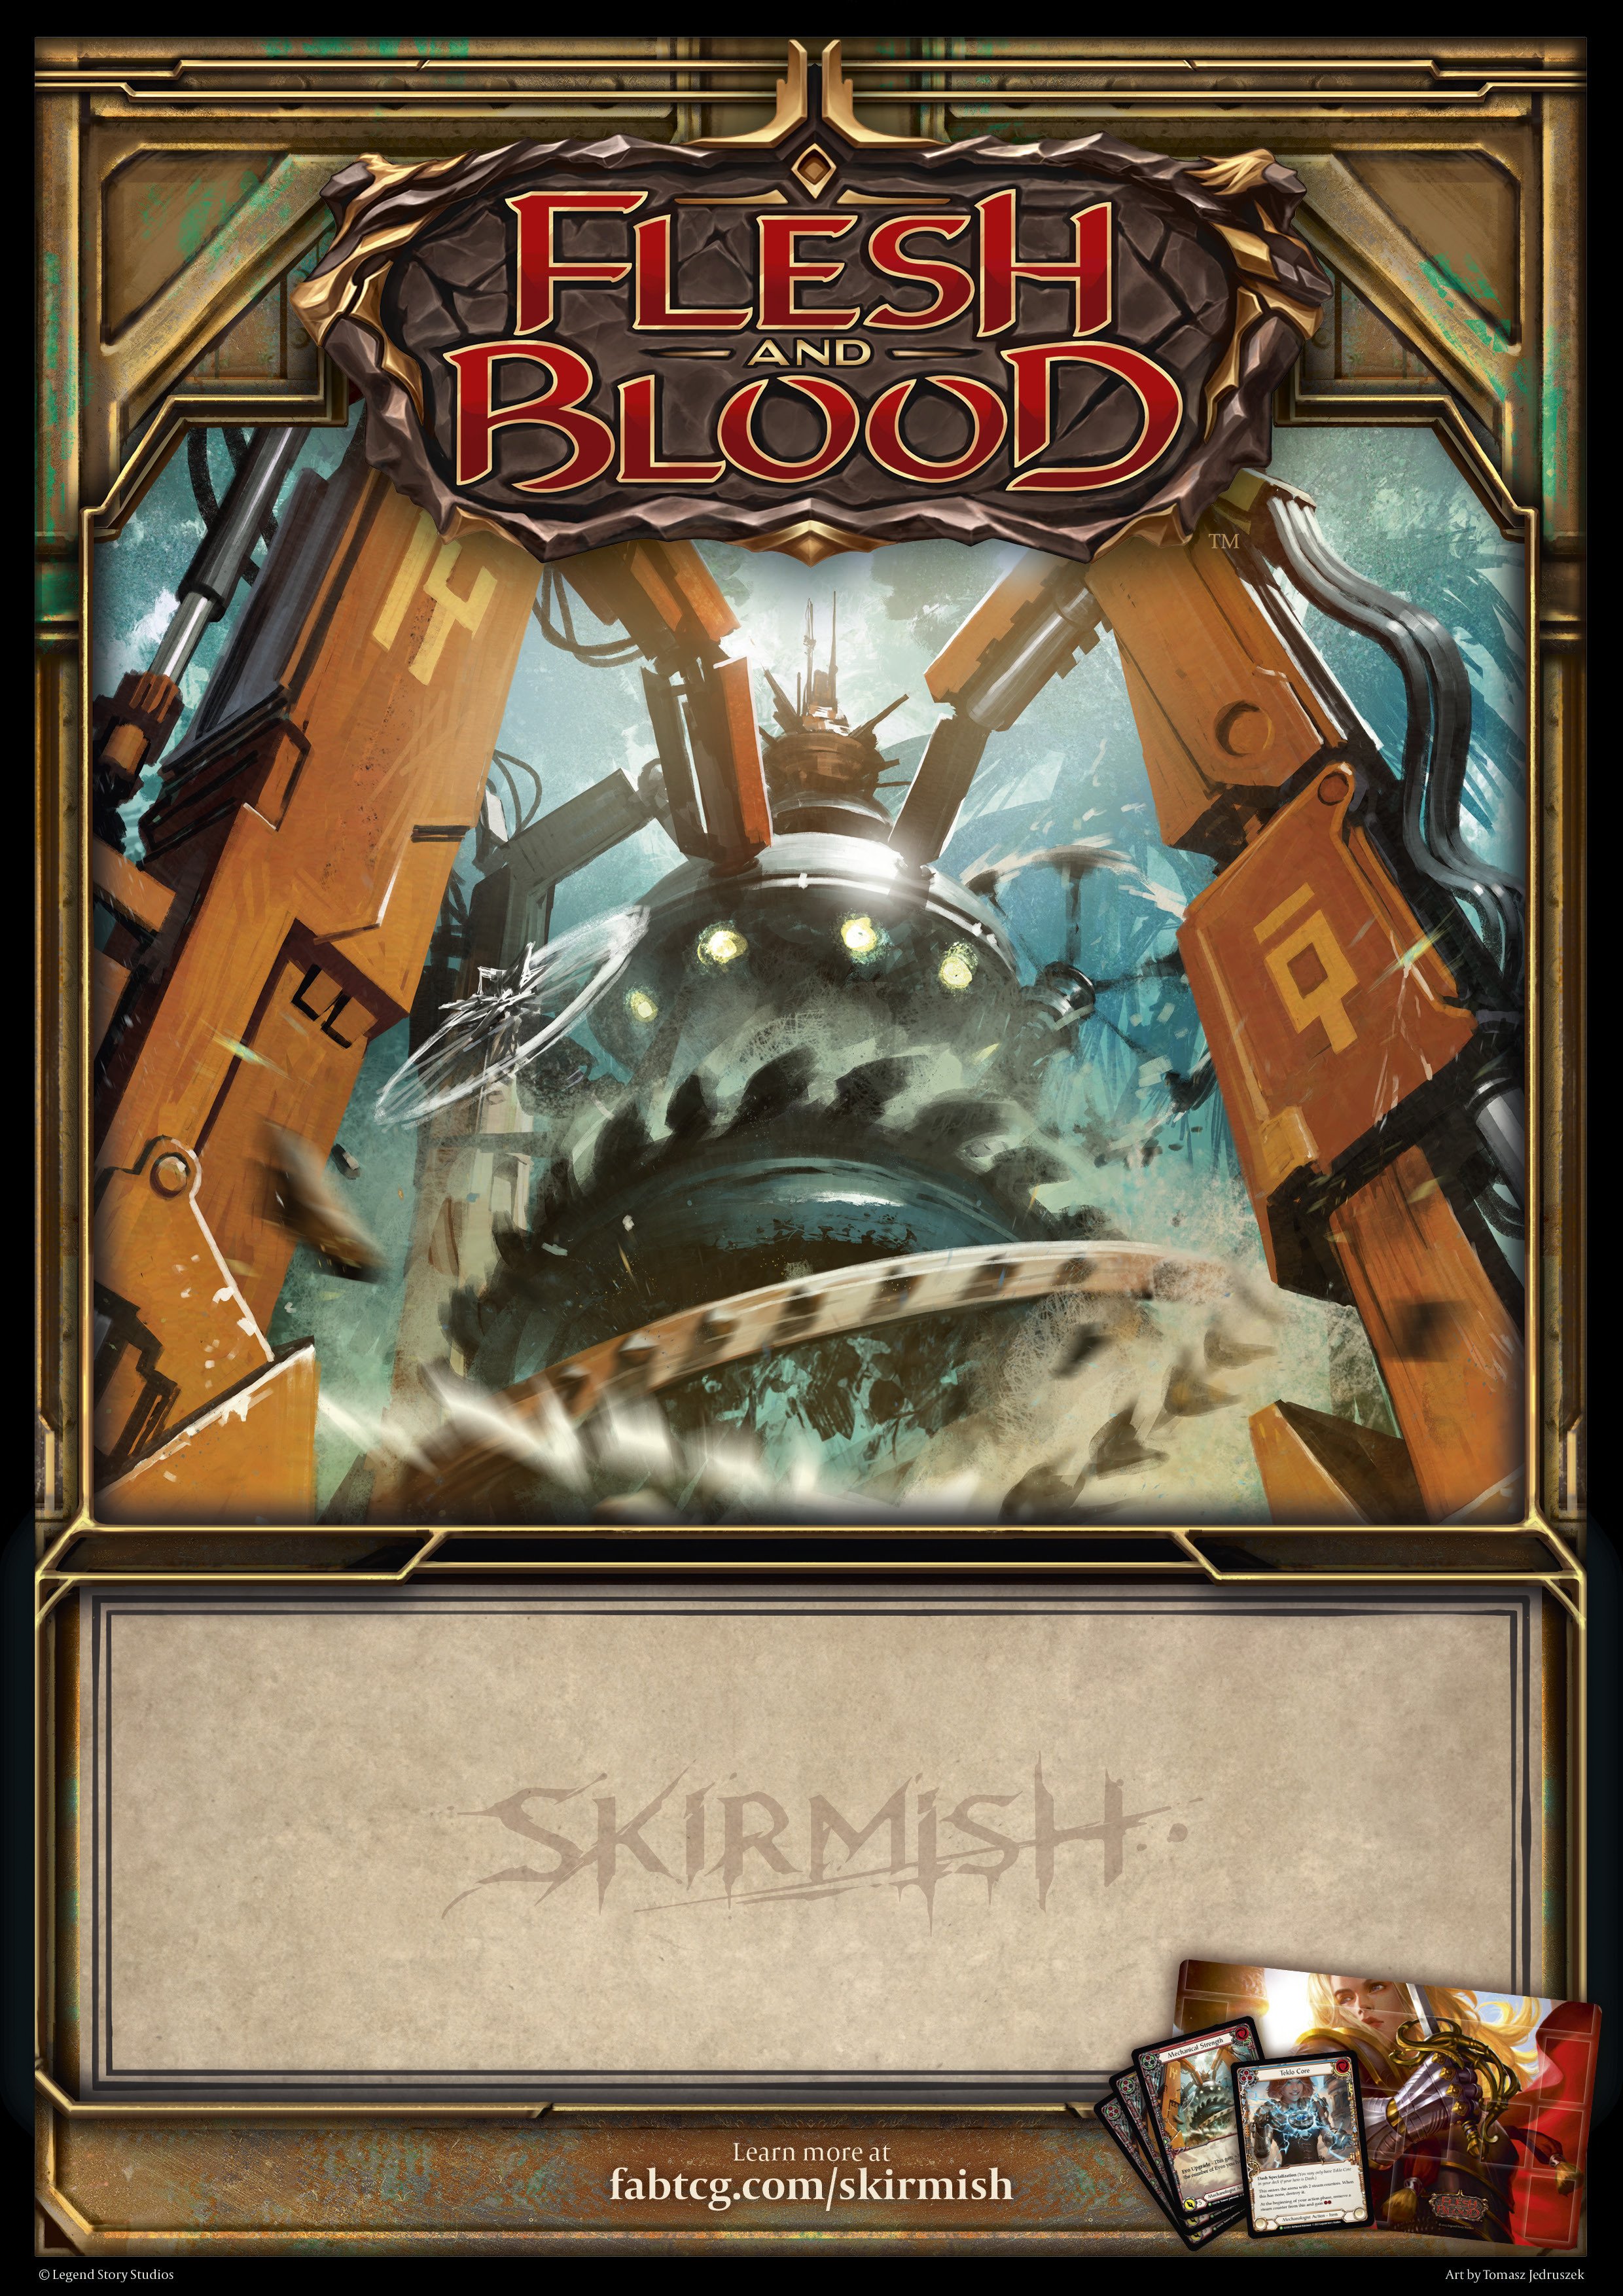 Flesh and Blood TCG - Skirmish Season 6 - Google My Maps